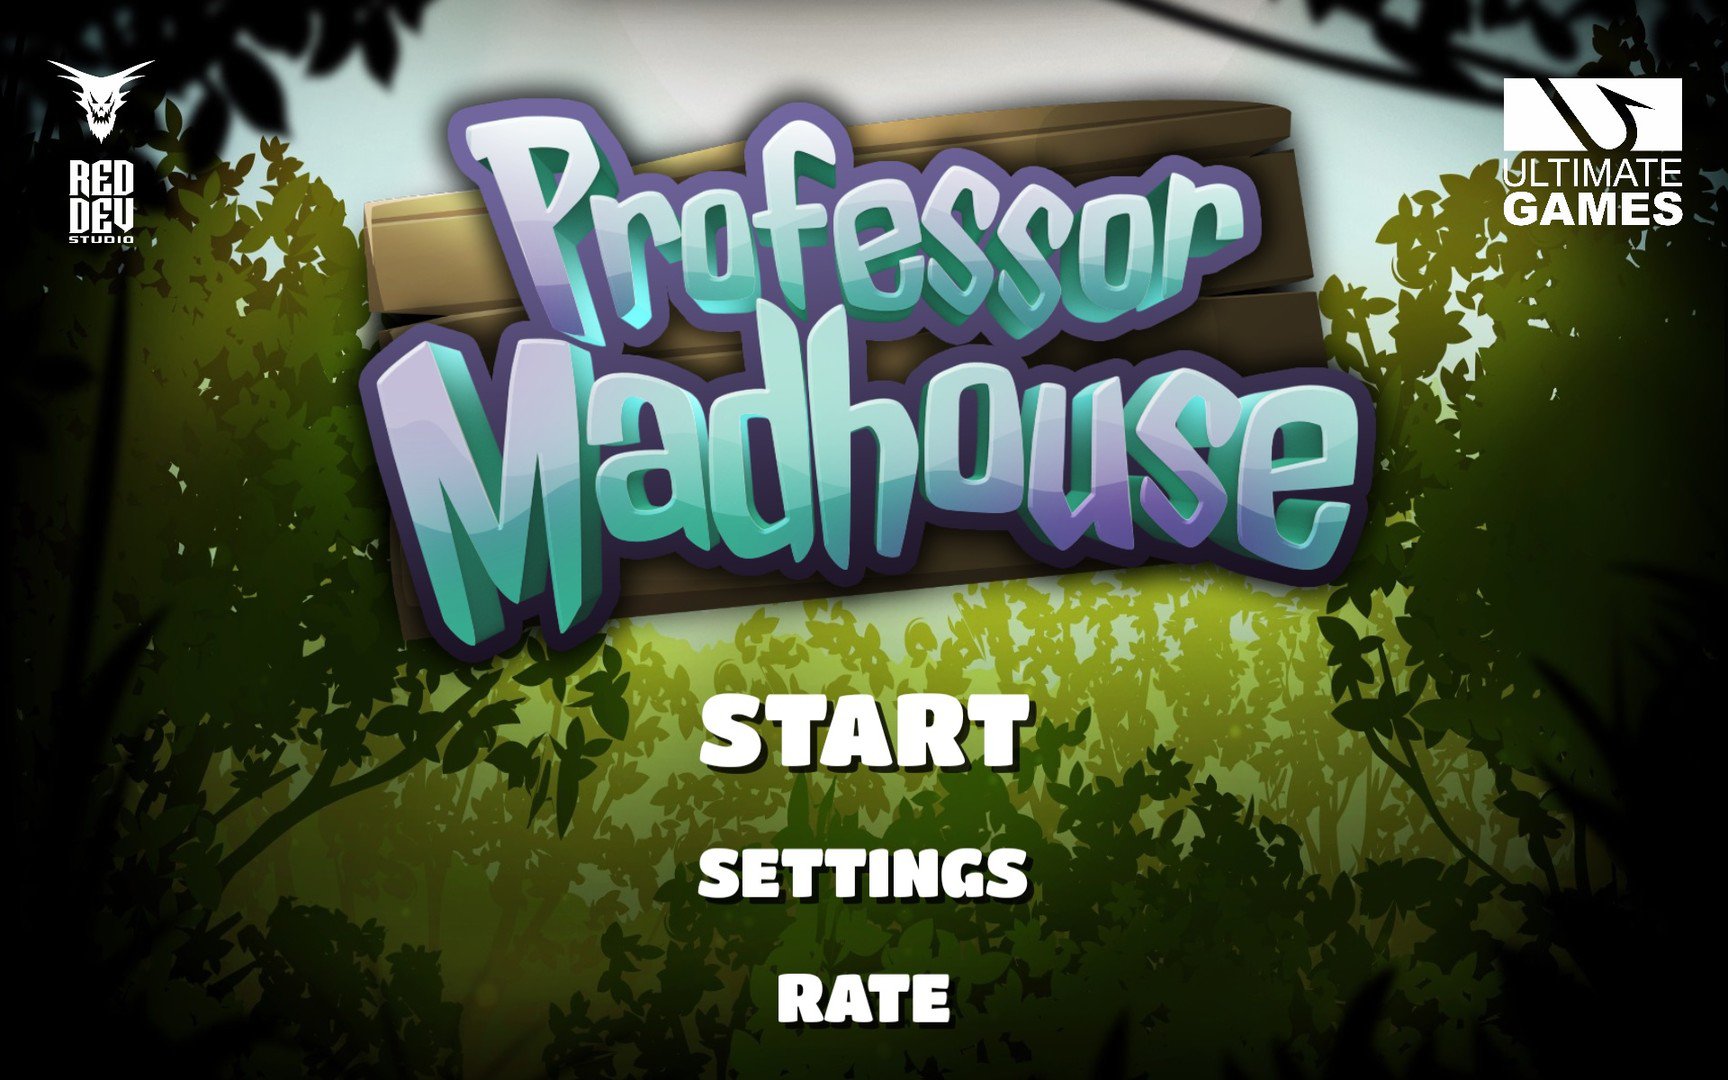 Professor Madhouse 15